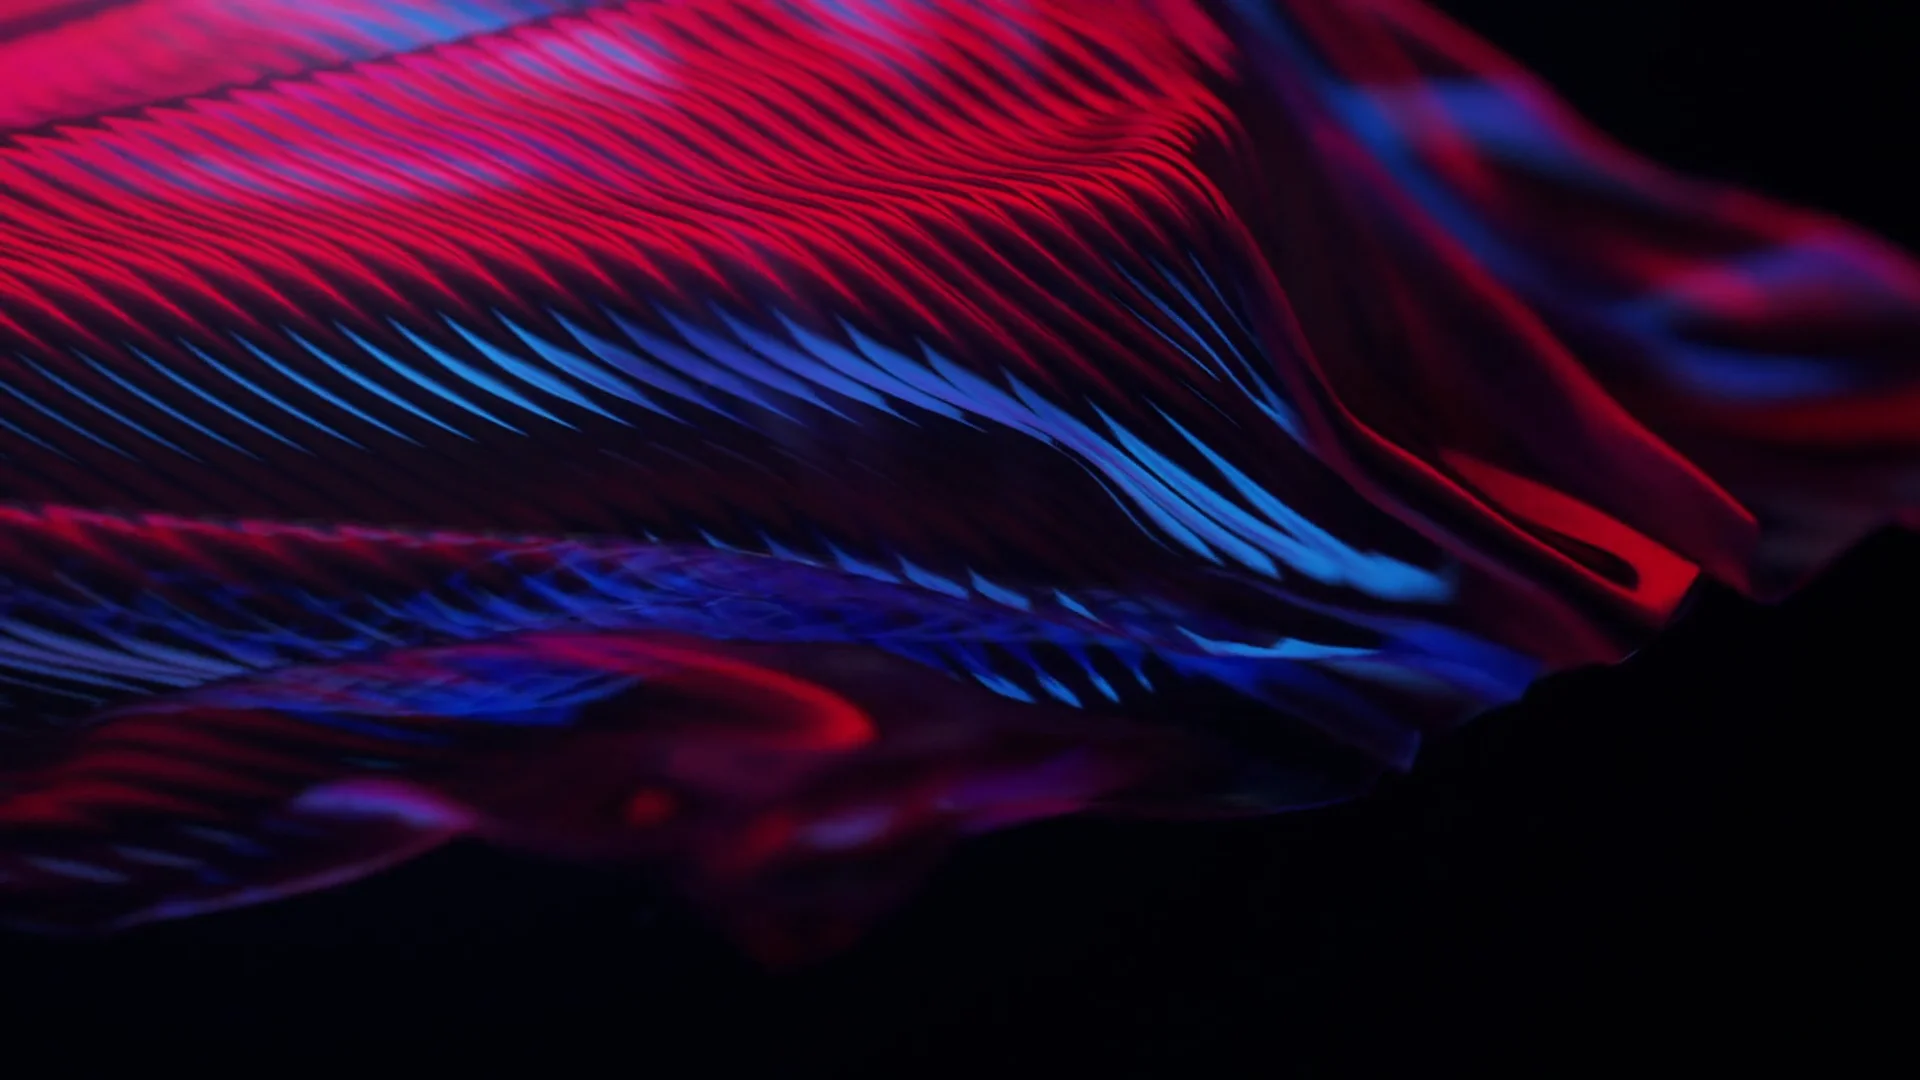 OnePlus 6 Red on Vimeo